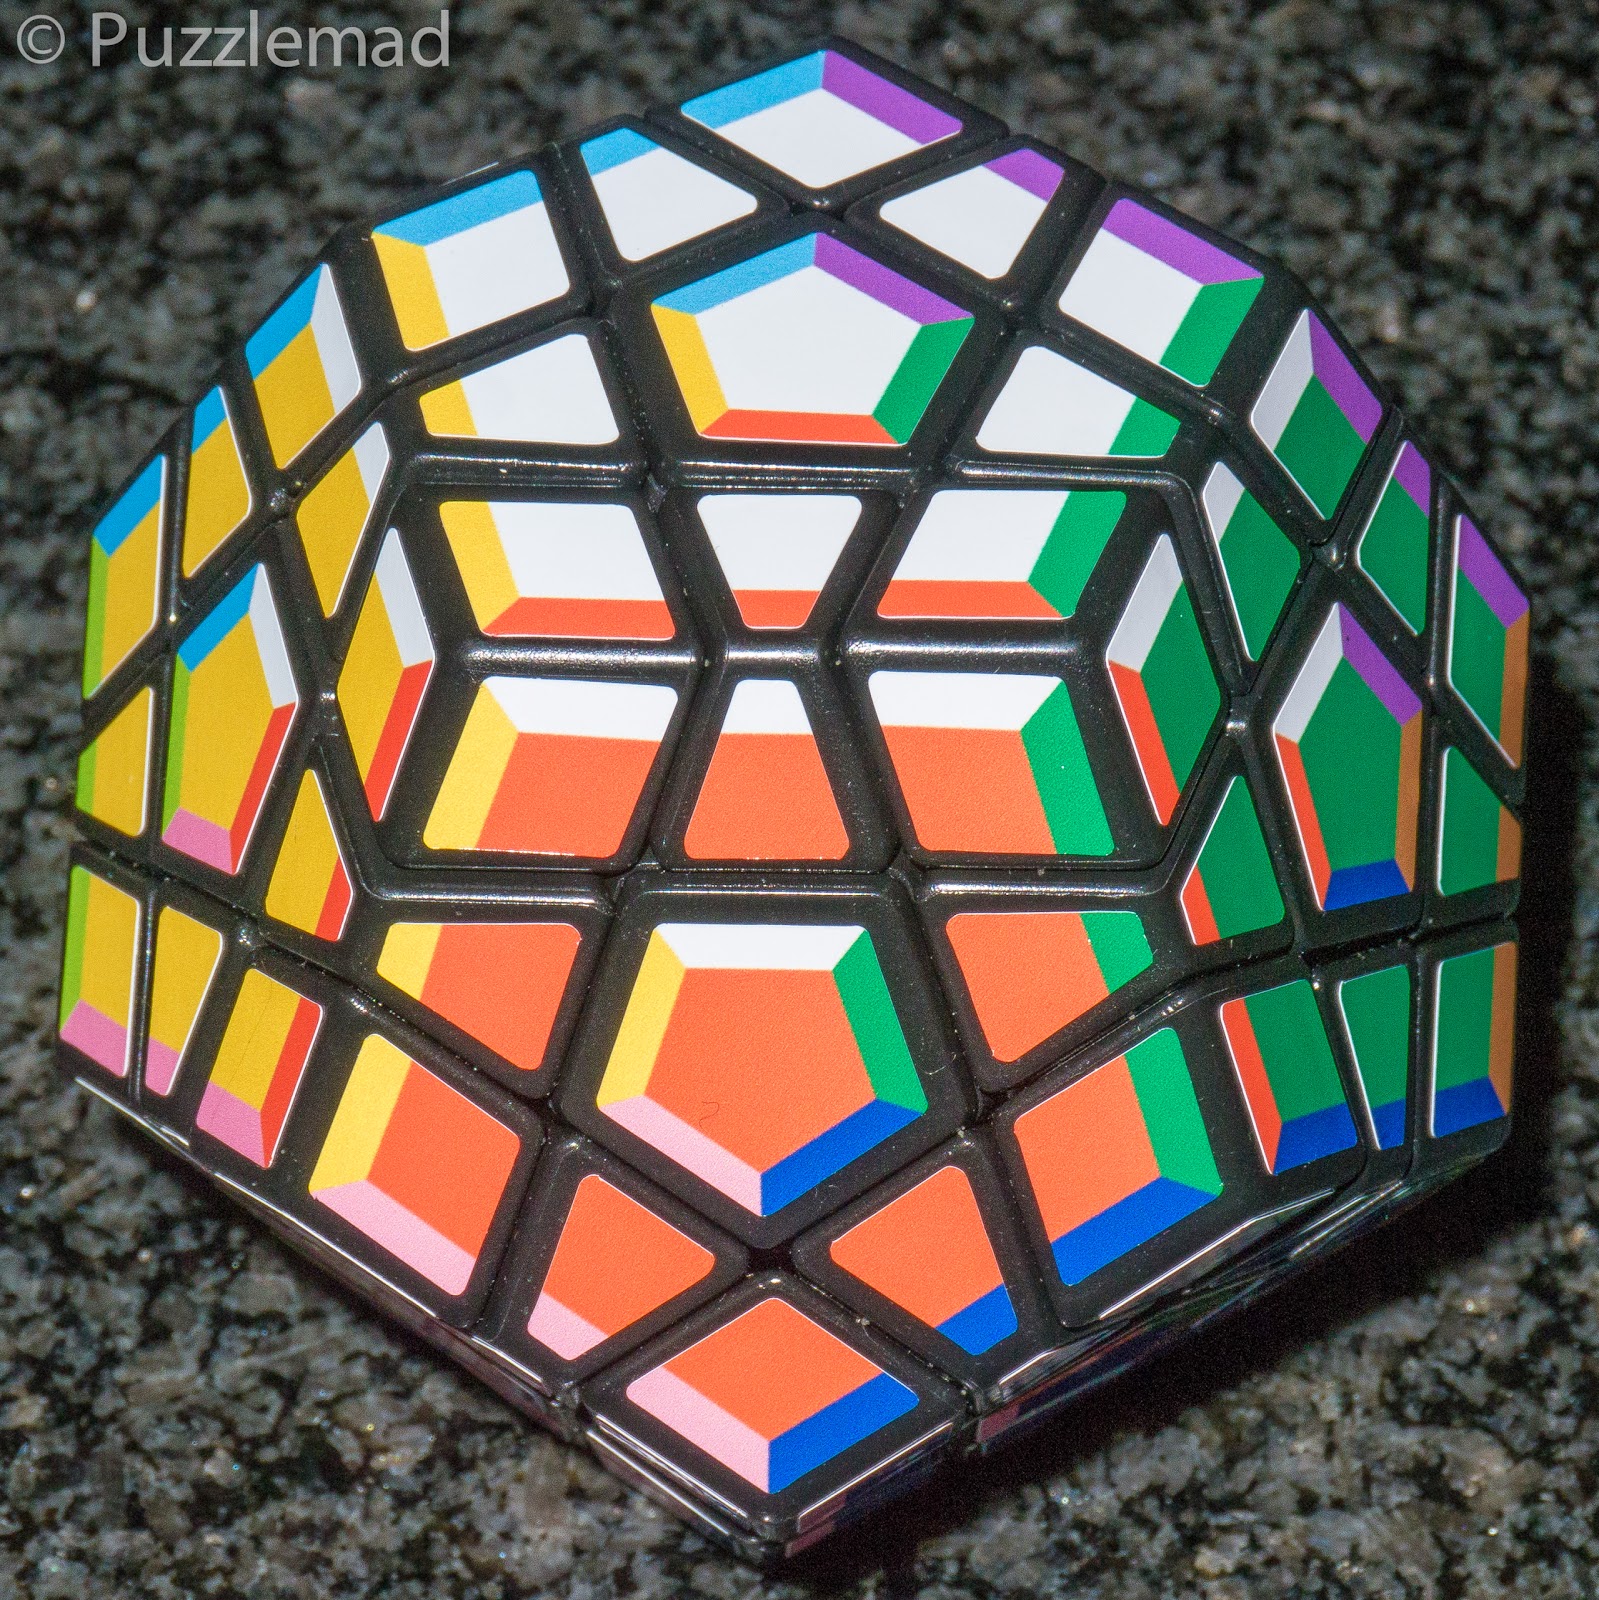 Mf8 12 Sided Curvy Starminx Maigc Cube Twist Puzzle Bauhinia Dodecahedron II 